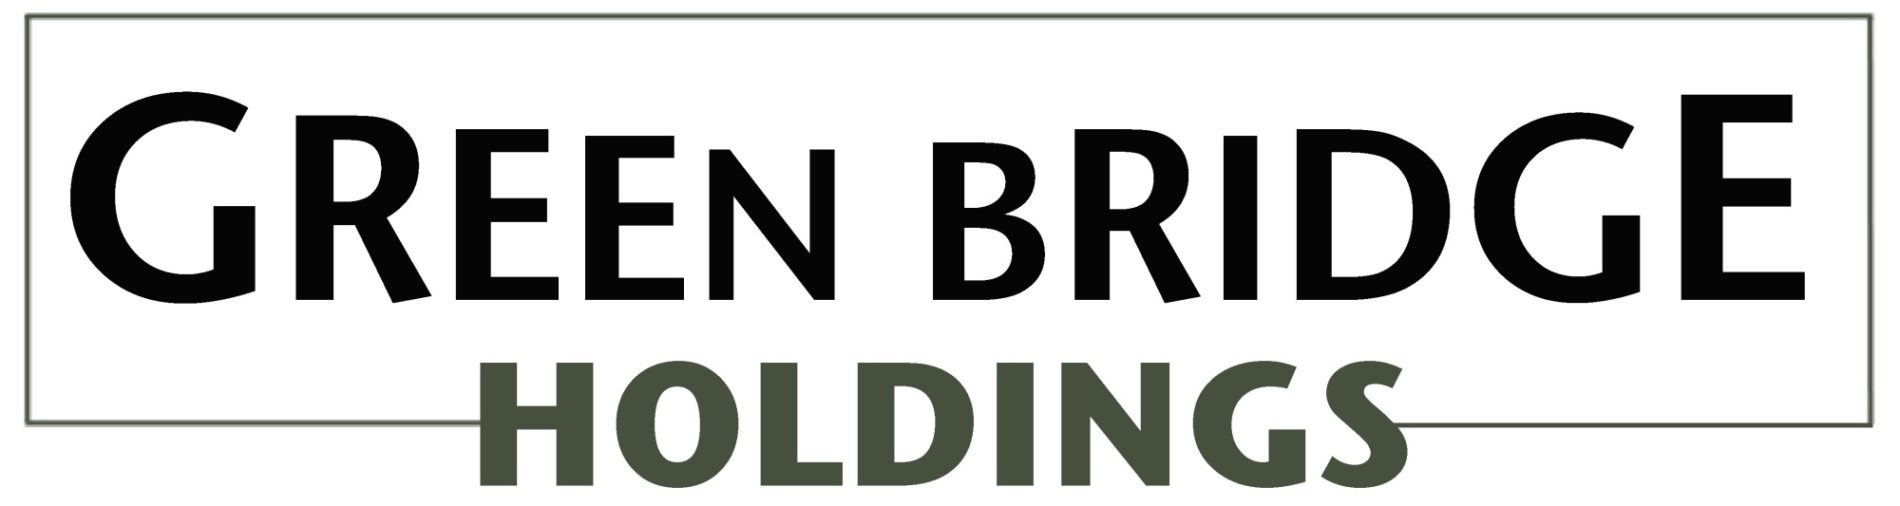 Green Bridge Holdings, Inc.